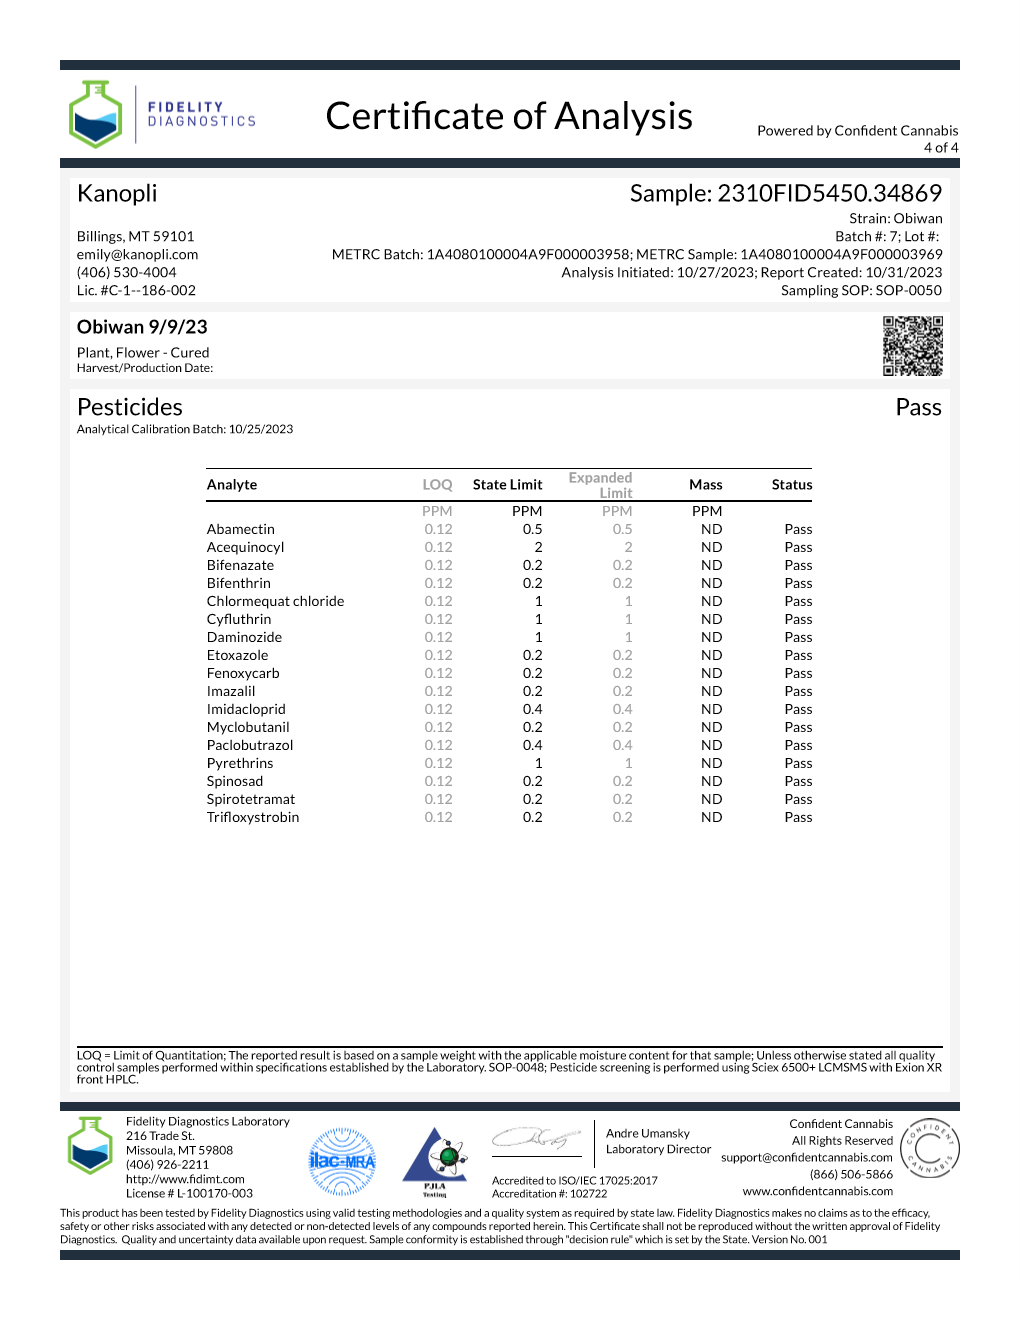 Obiwan - Indica 26% THC (Sept. 2023) MEDICAL